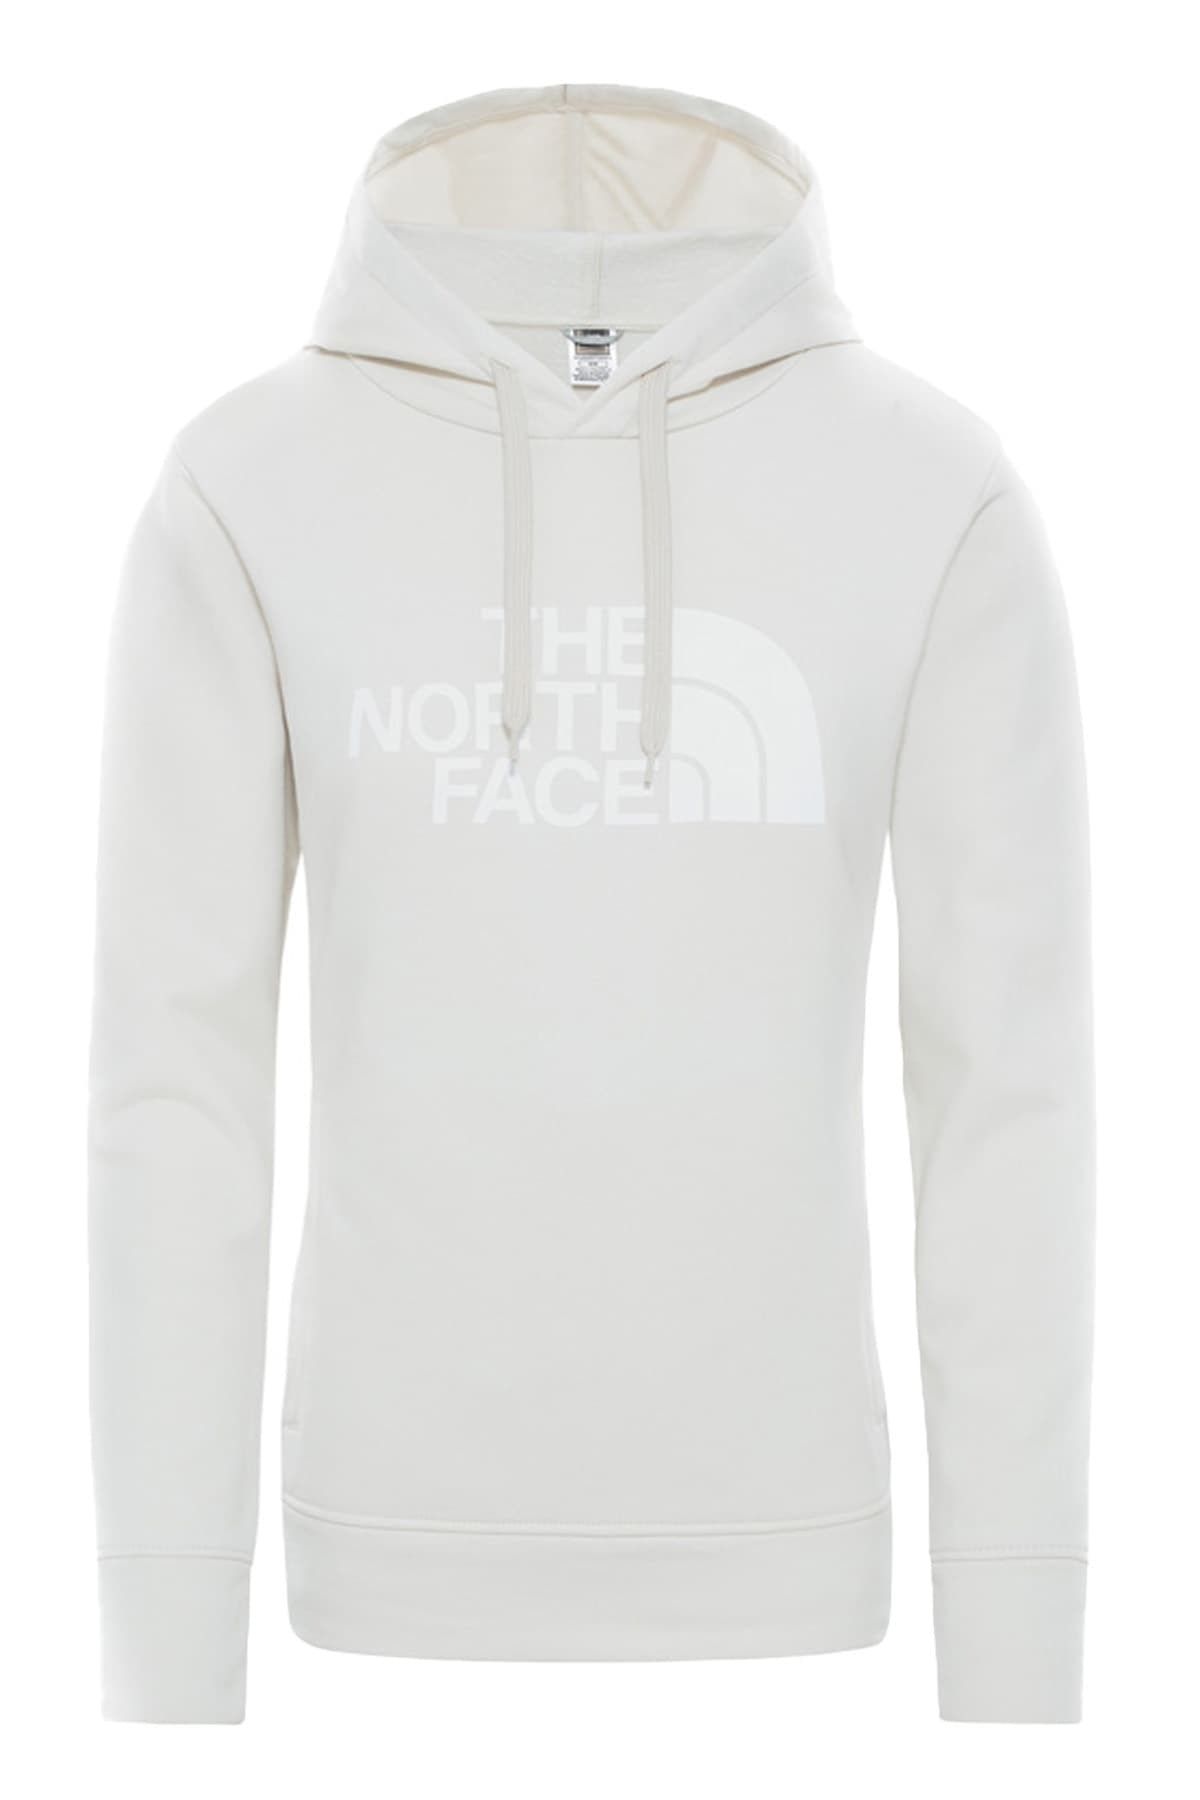 The North Face Pullover Kadın Sweatshirt - Nf0a4m8p